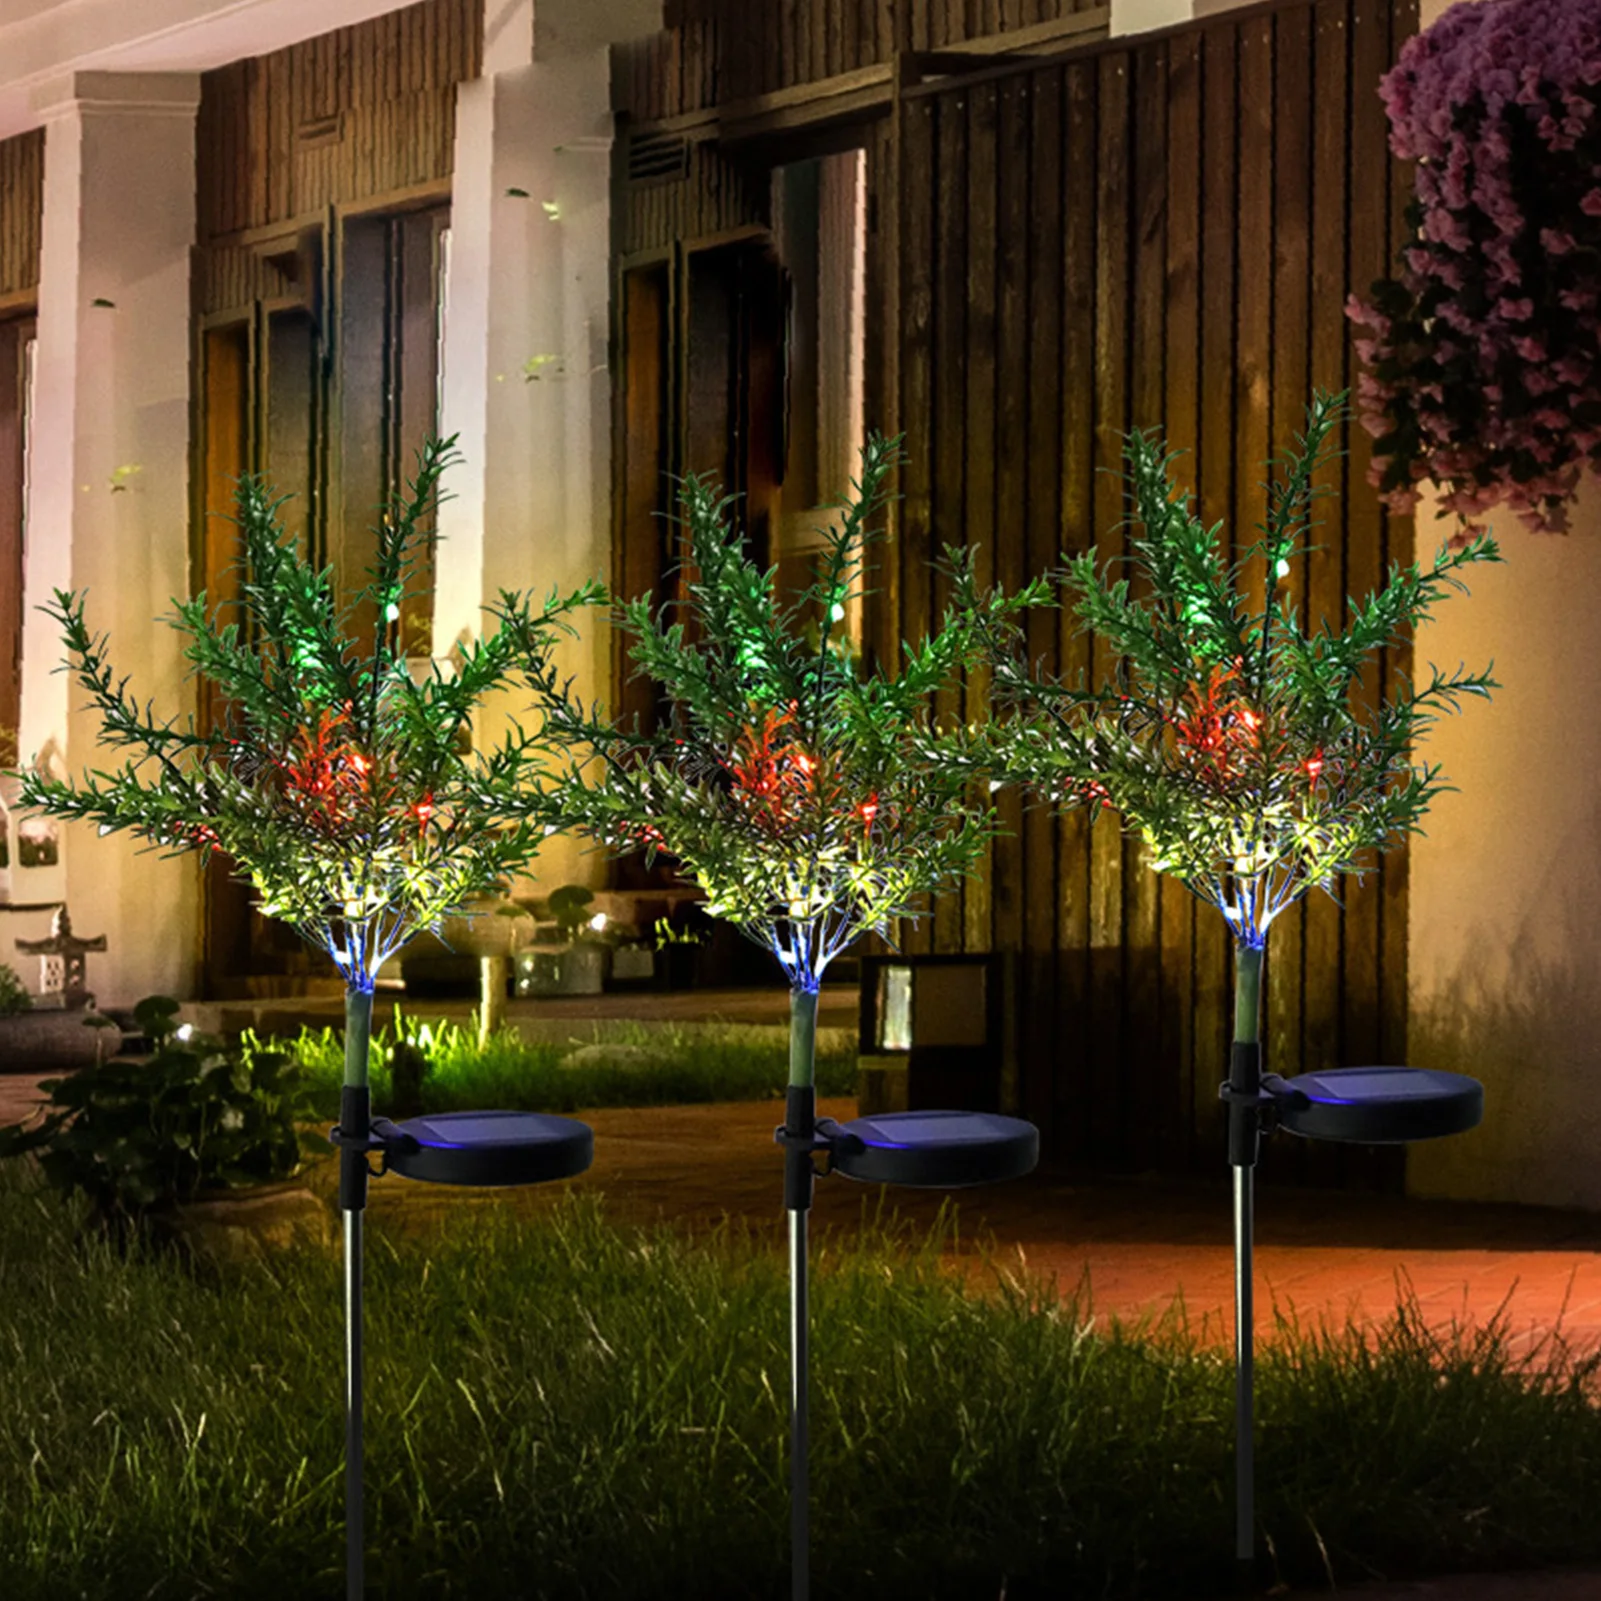 

2 Pcs Solar Garden Lights Waterproof Ground Plug Outdoor Garden Stake Lights Color Changing Christmas Decorative Landscape Light